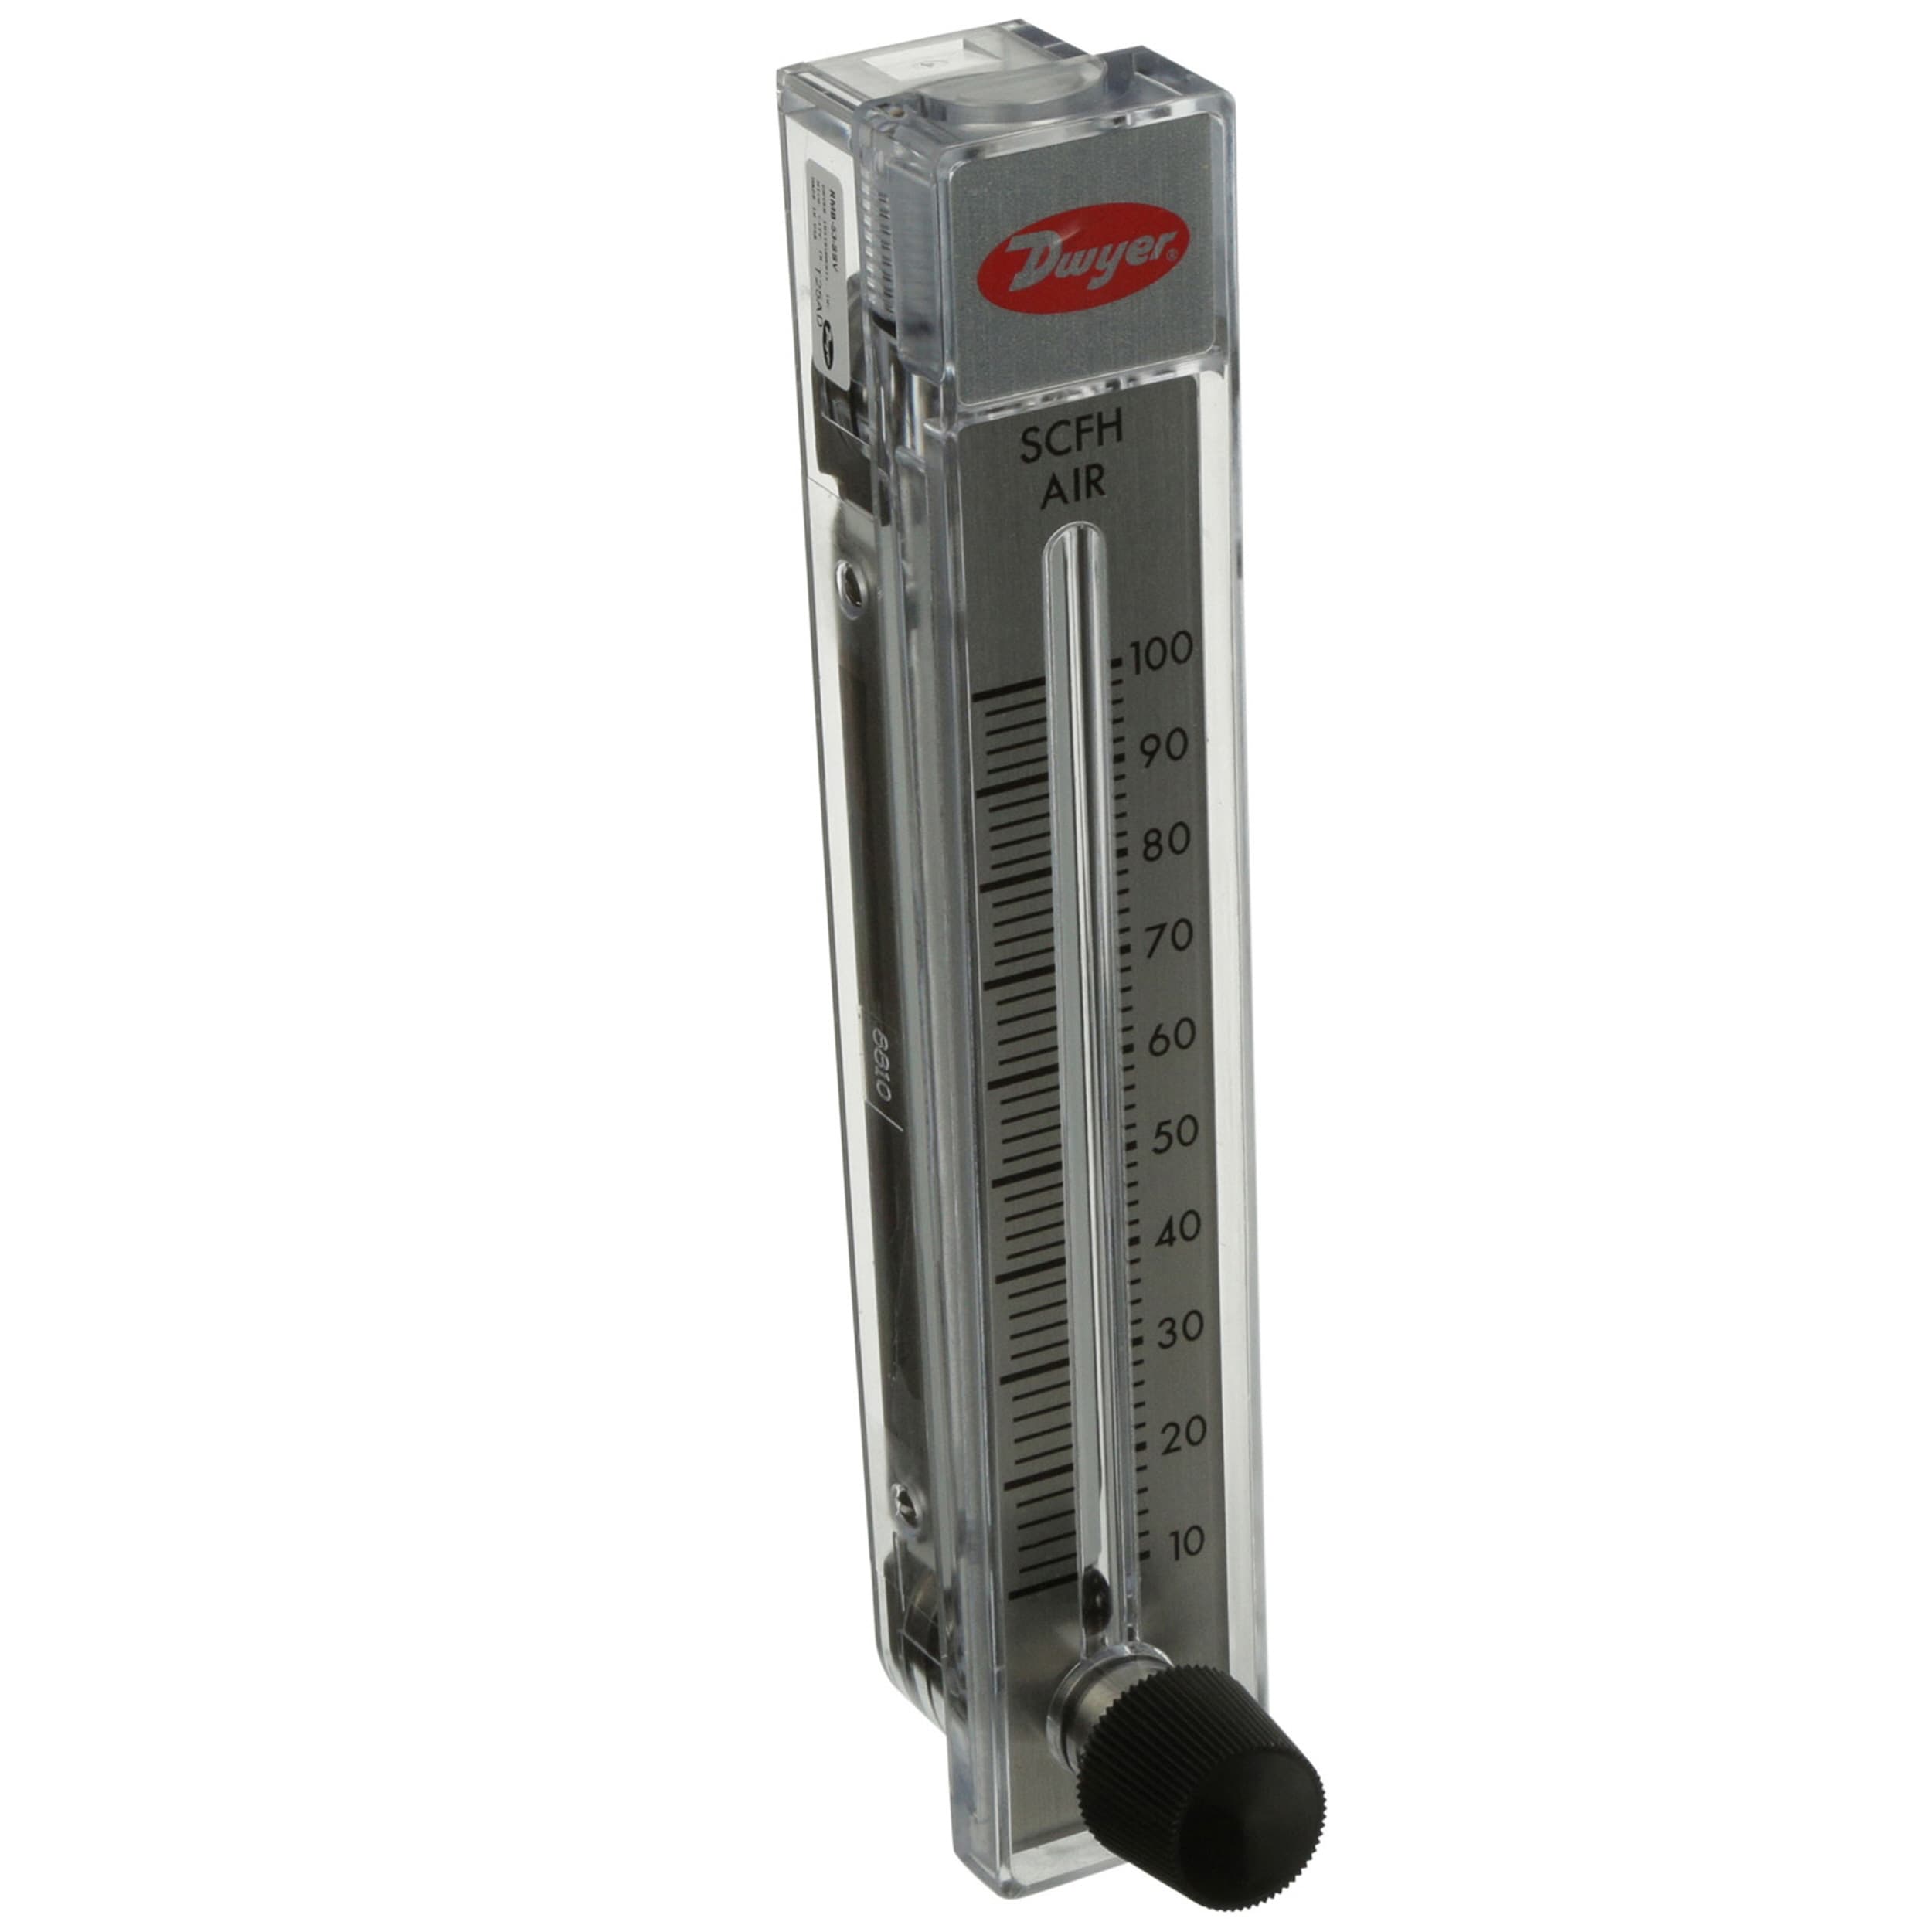 Dwyer Instruments RMB-53 S33A 10-100 Scaled SCFH Air Flowmeter New No Box I11 